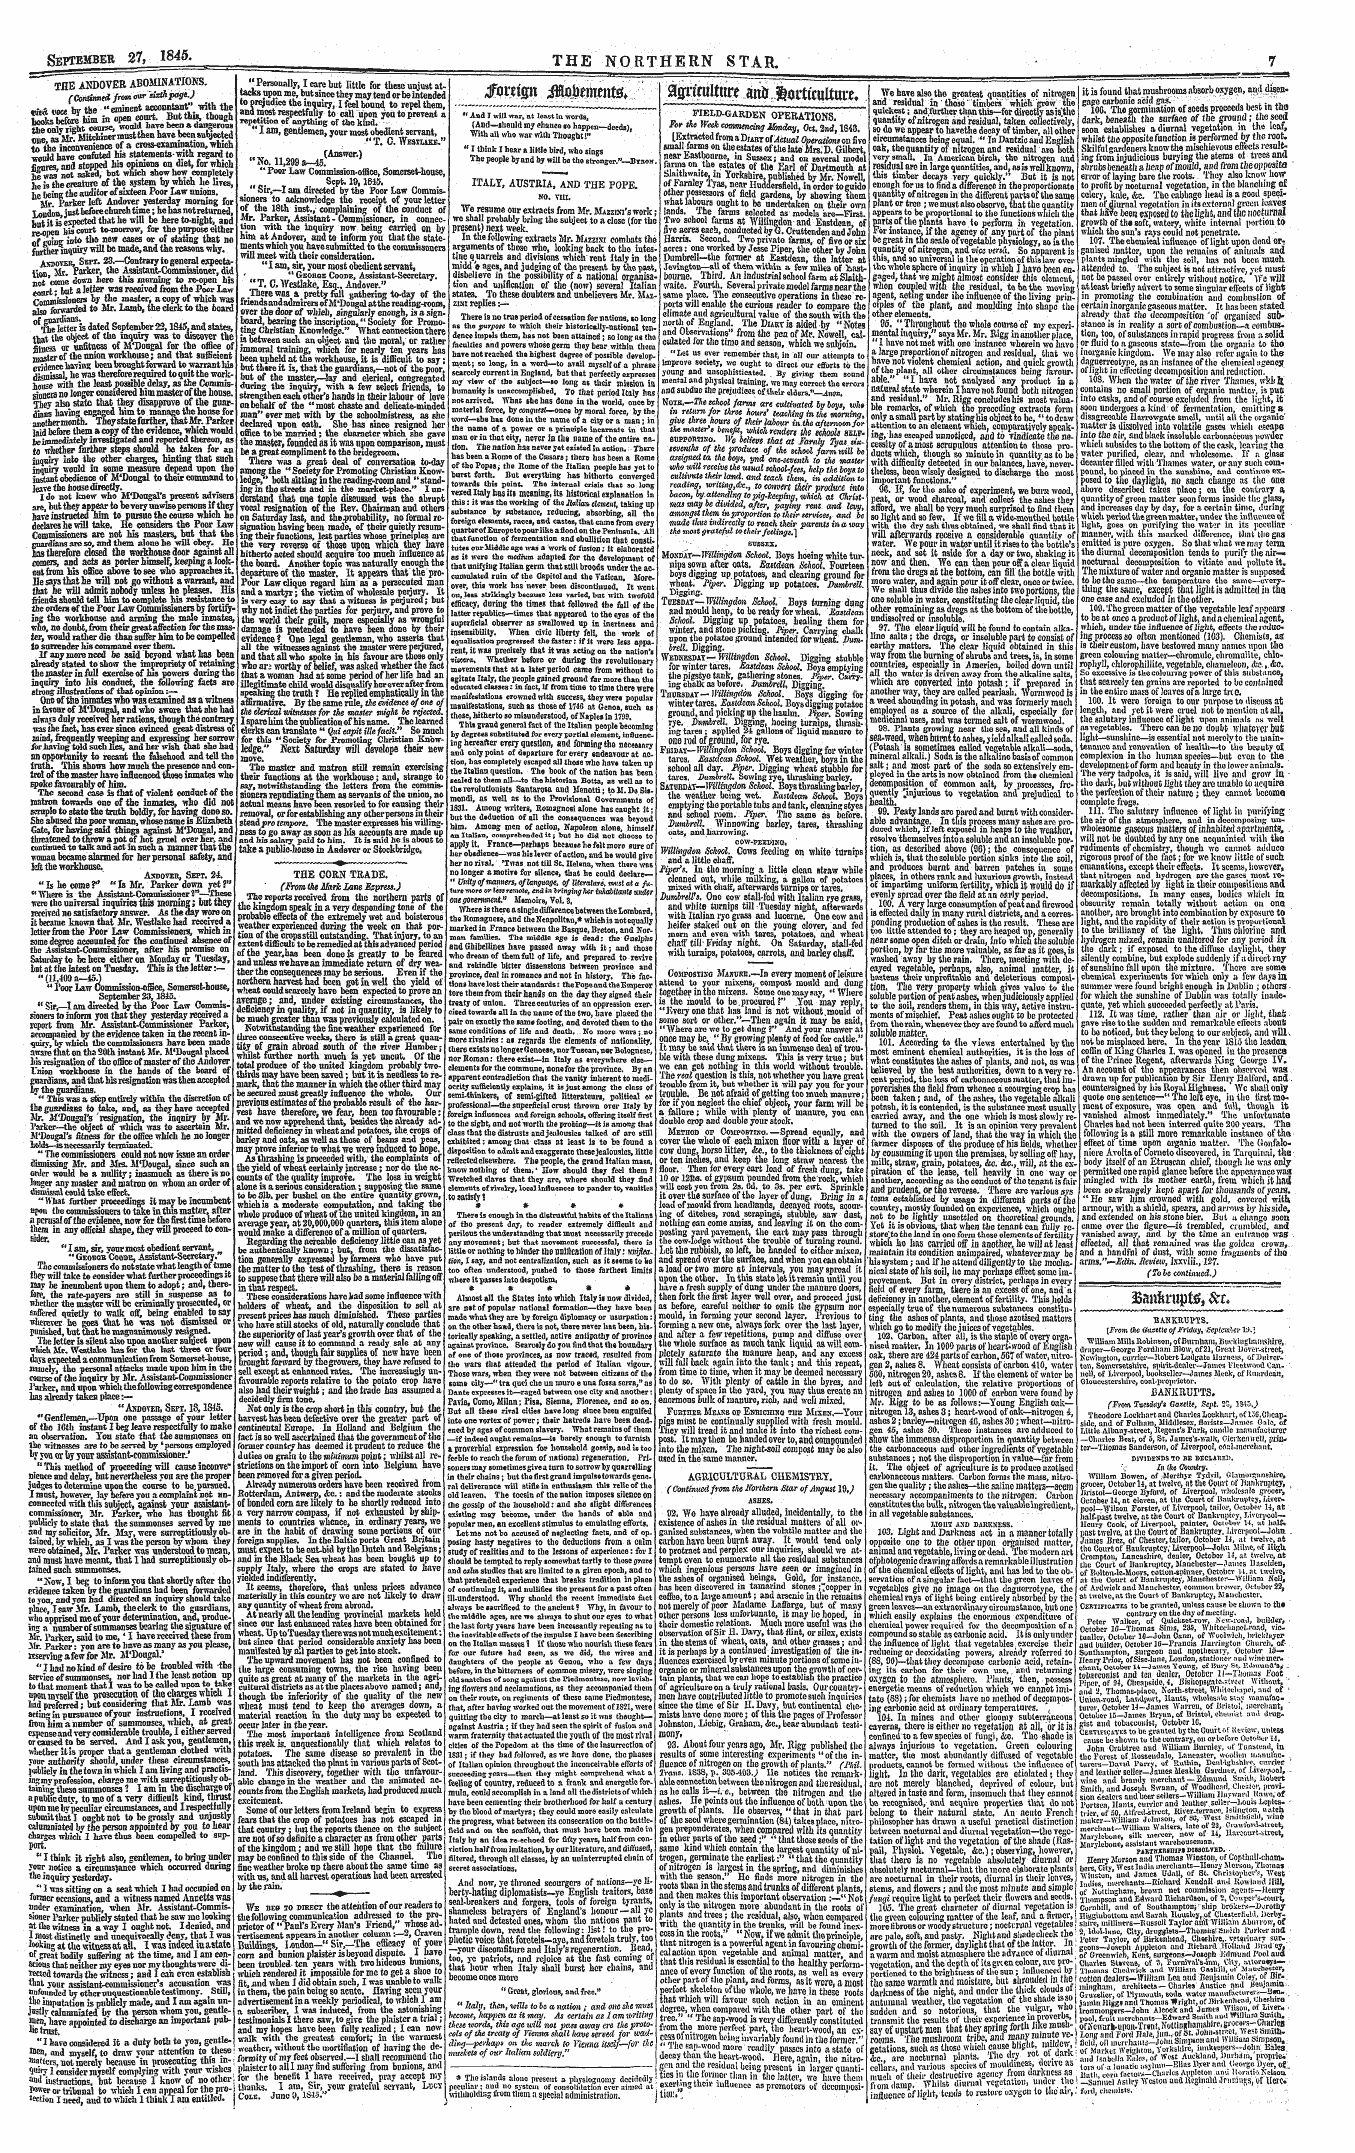 Northern Star (1837-1852): jS F Y, 2nd edition - Asrr Iroltttre M Jtorticulture